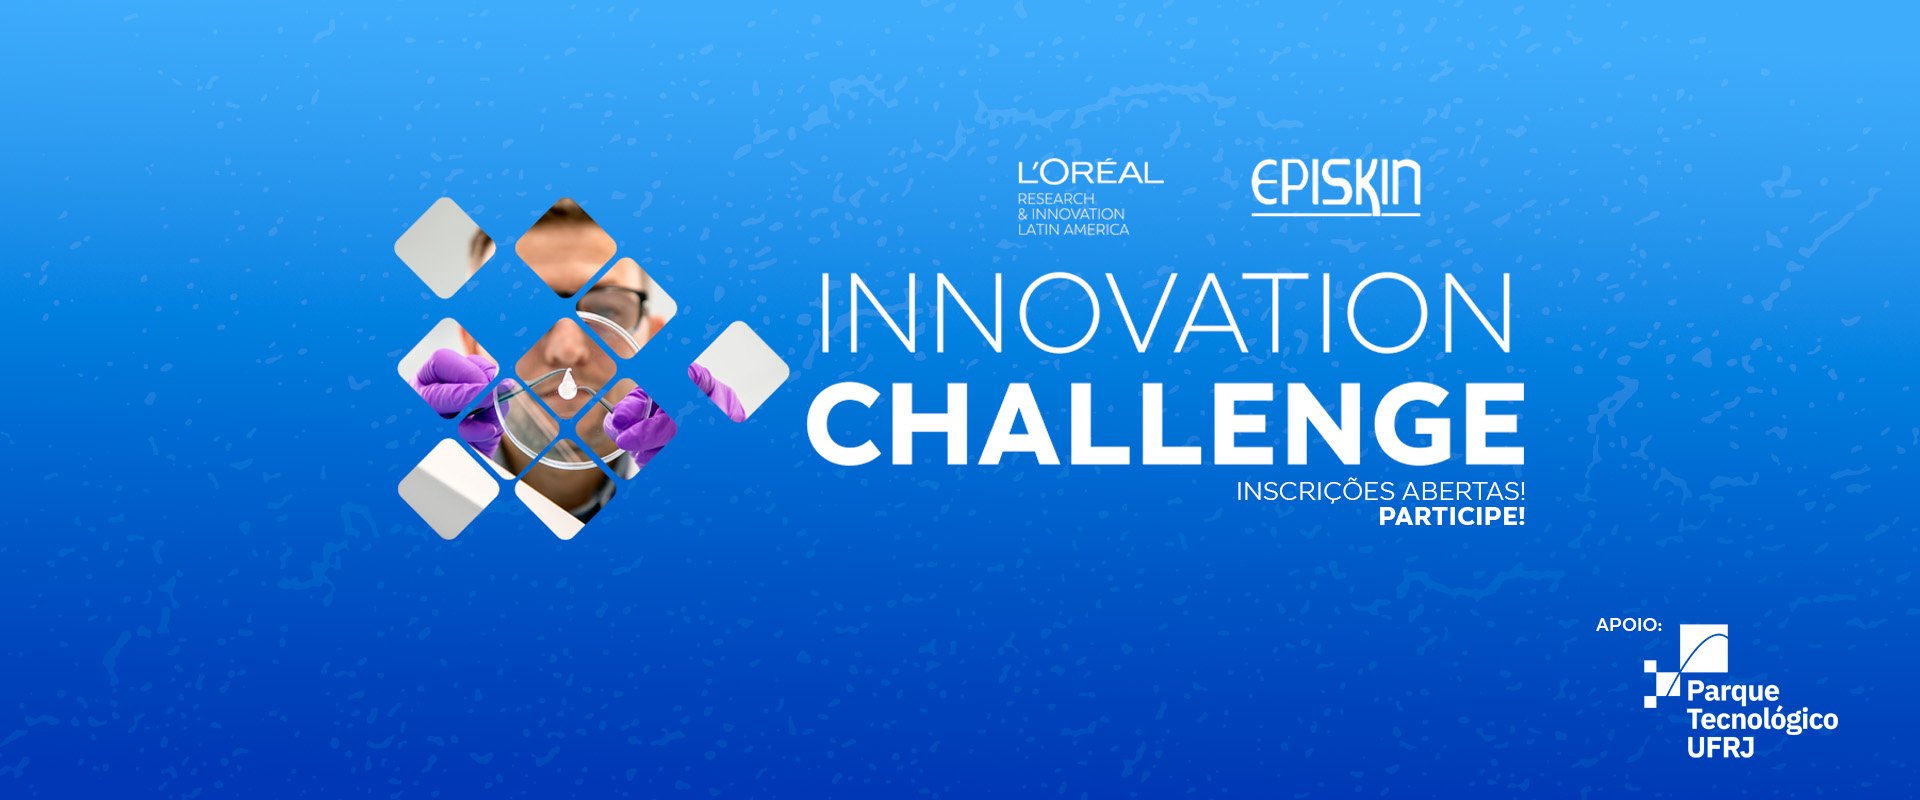 banner innovation challenge